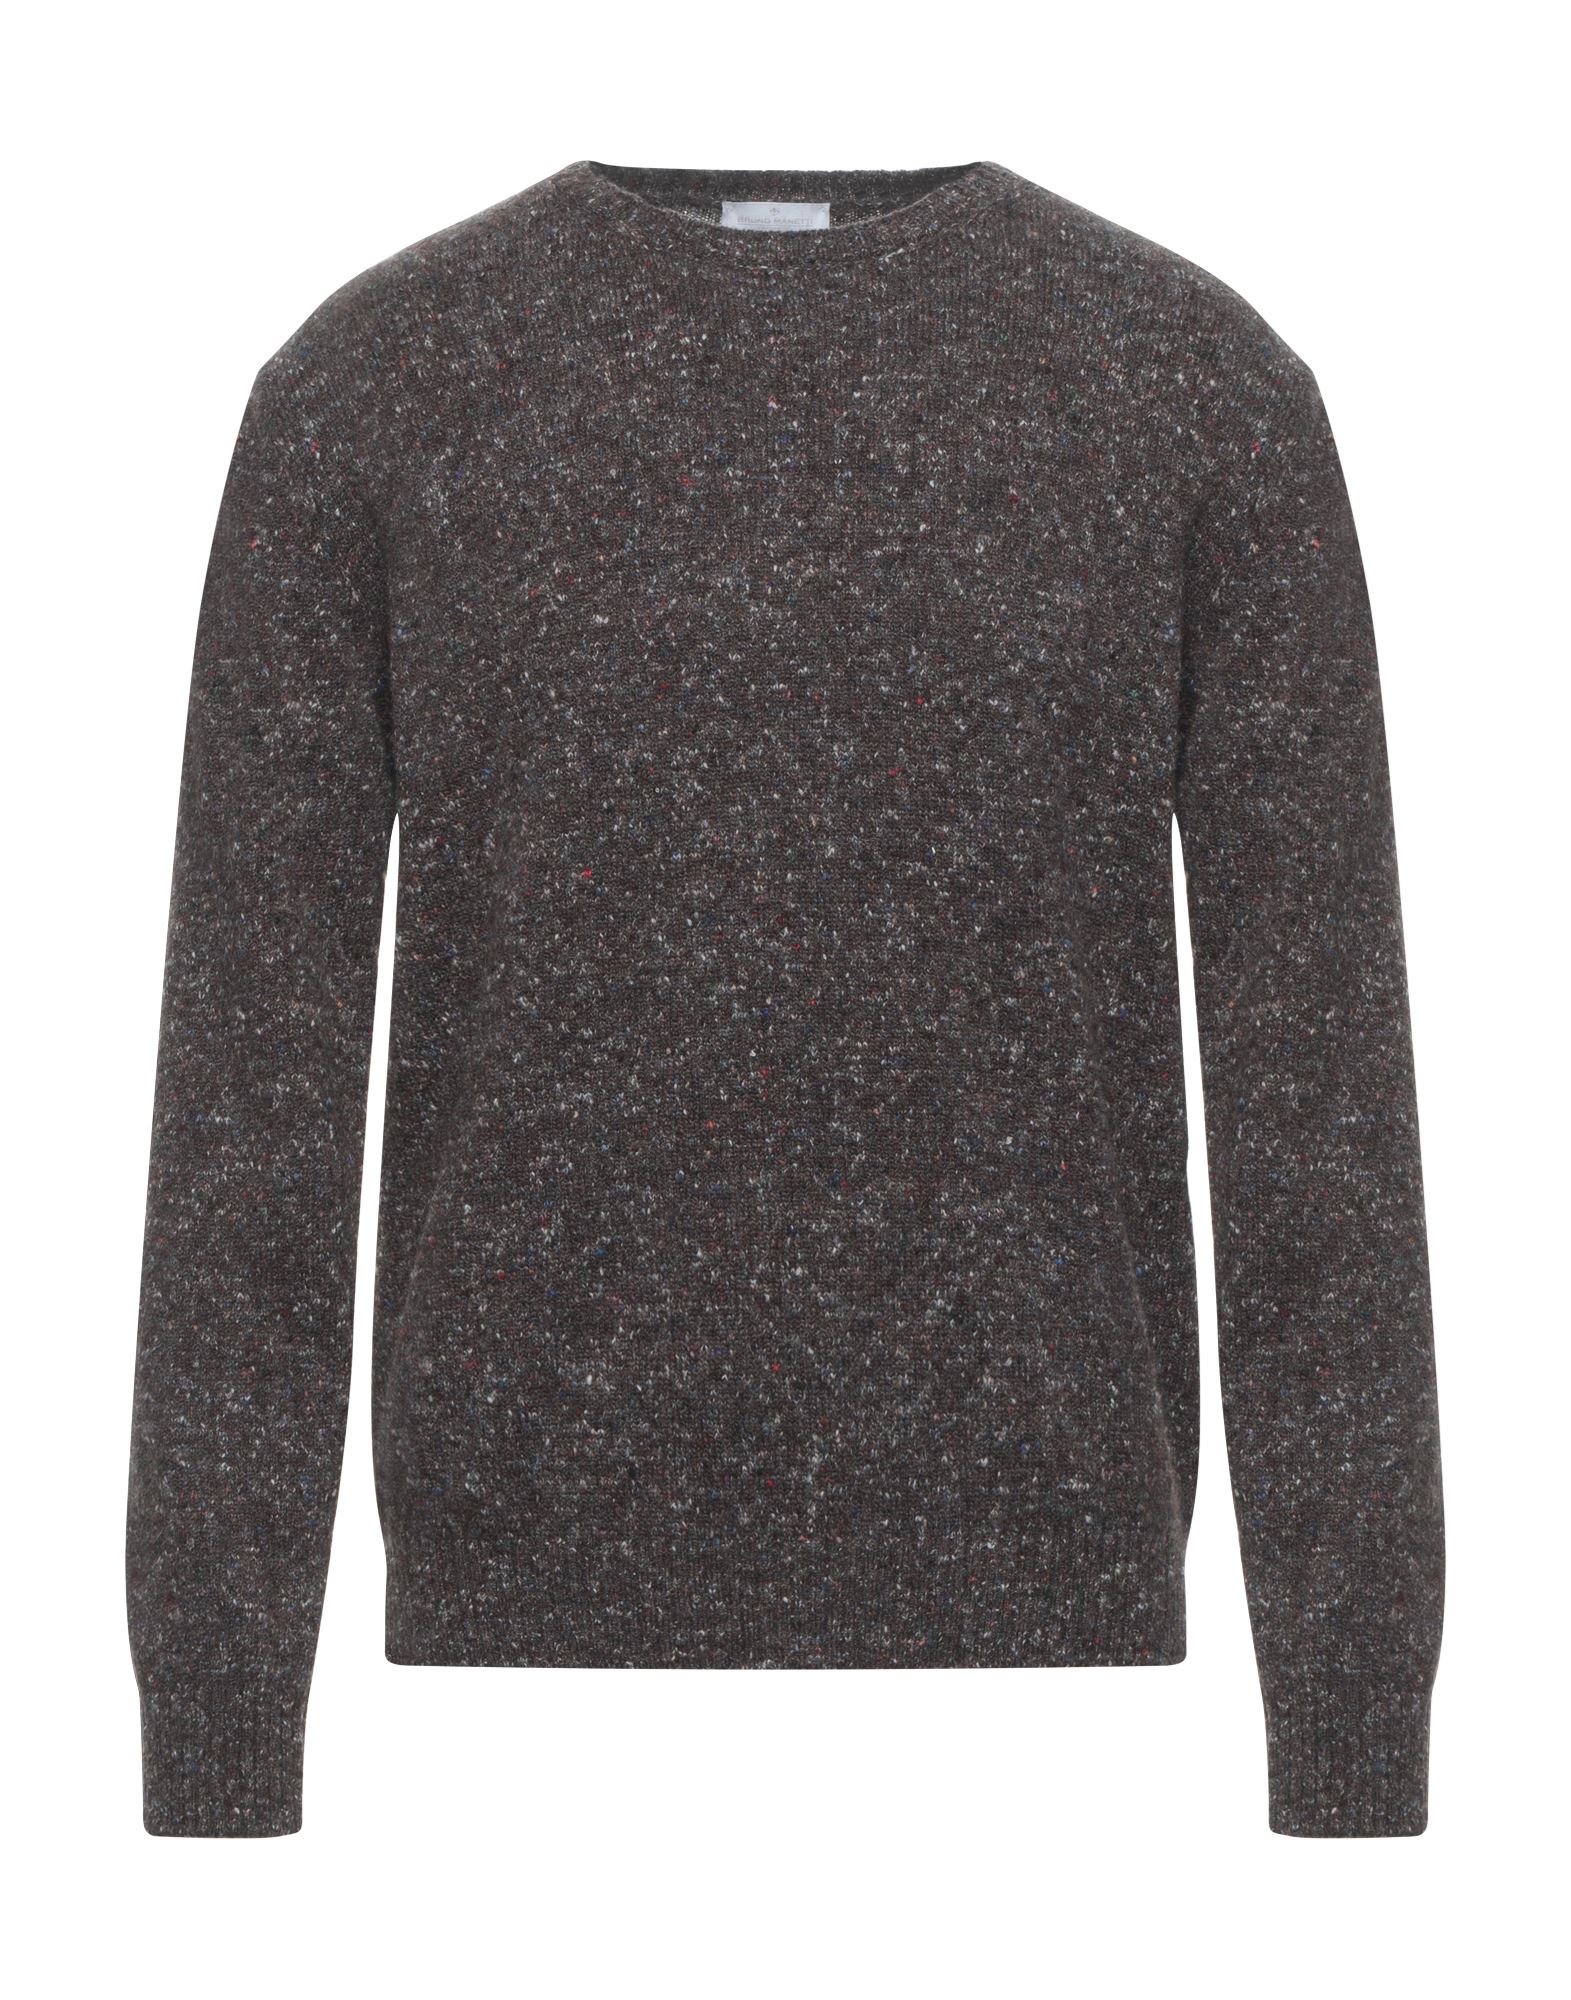 Bruno Manetti Sweaters In Dark Brown